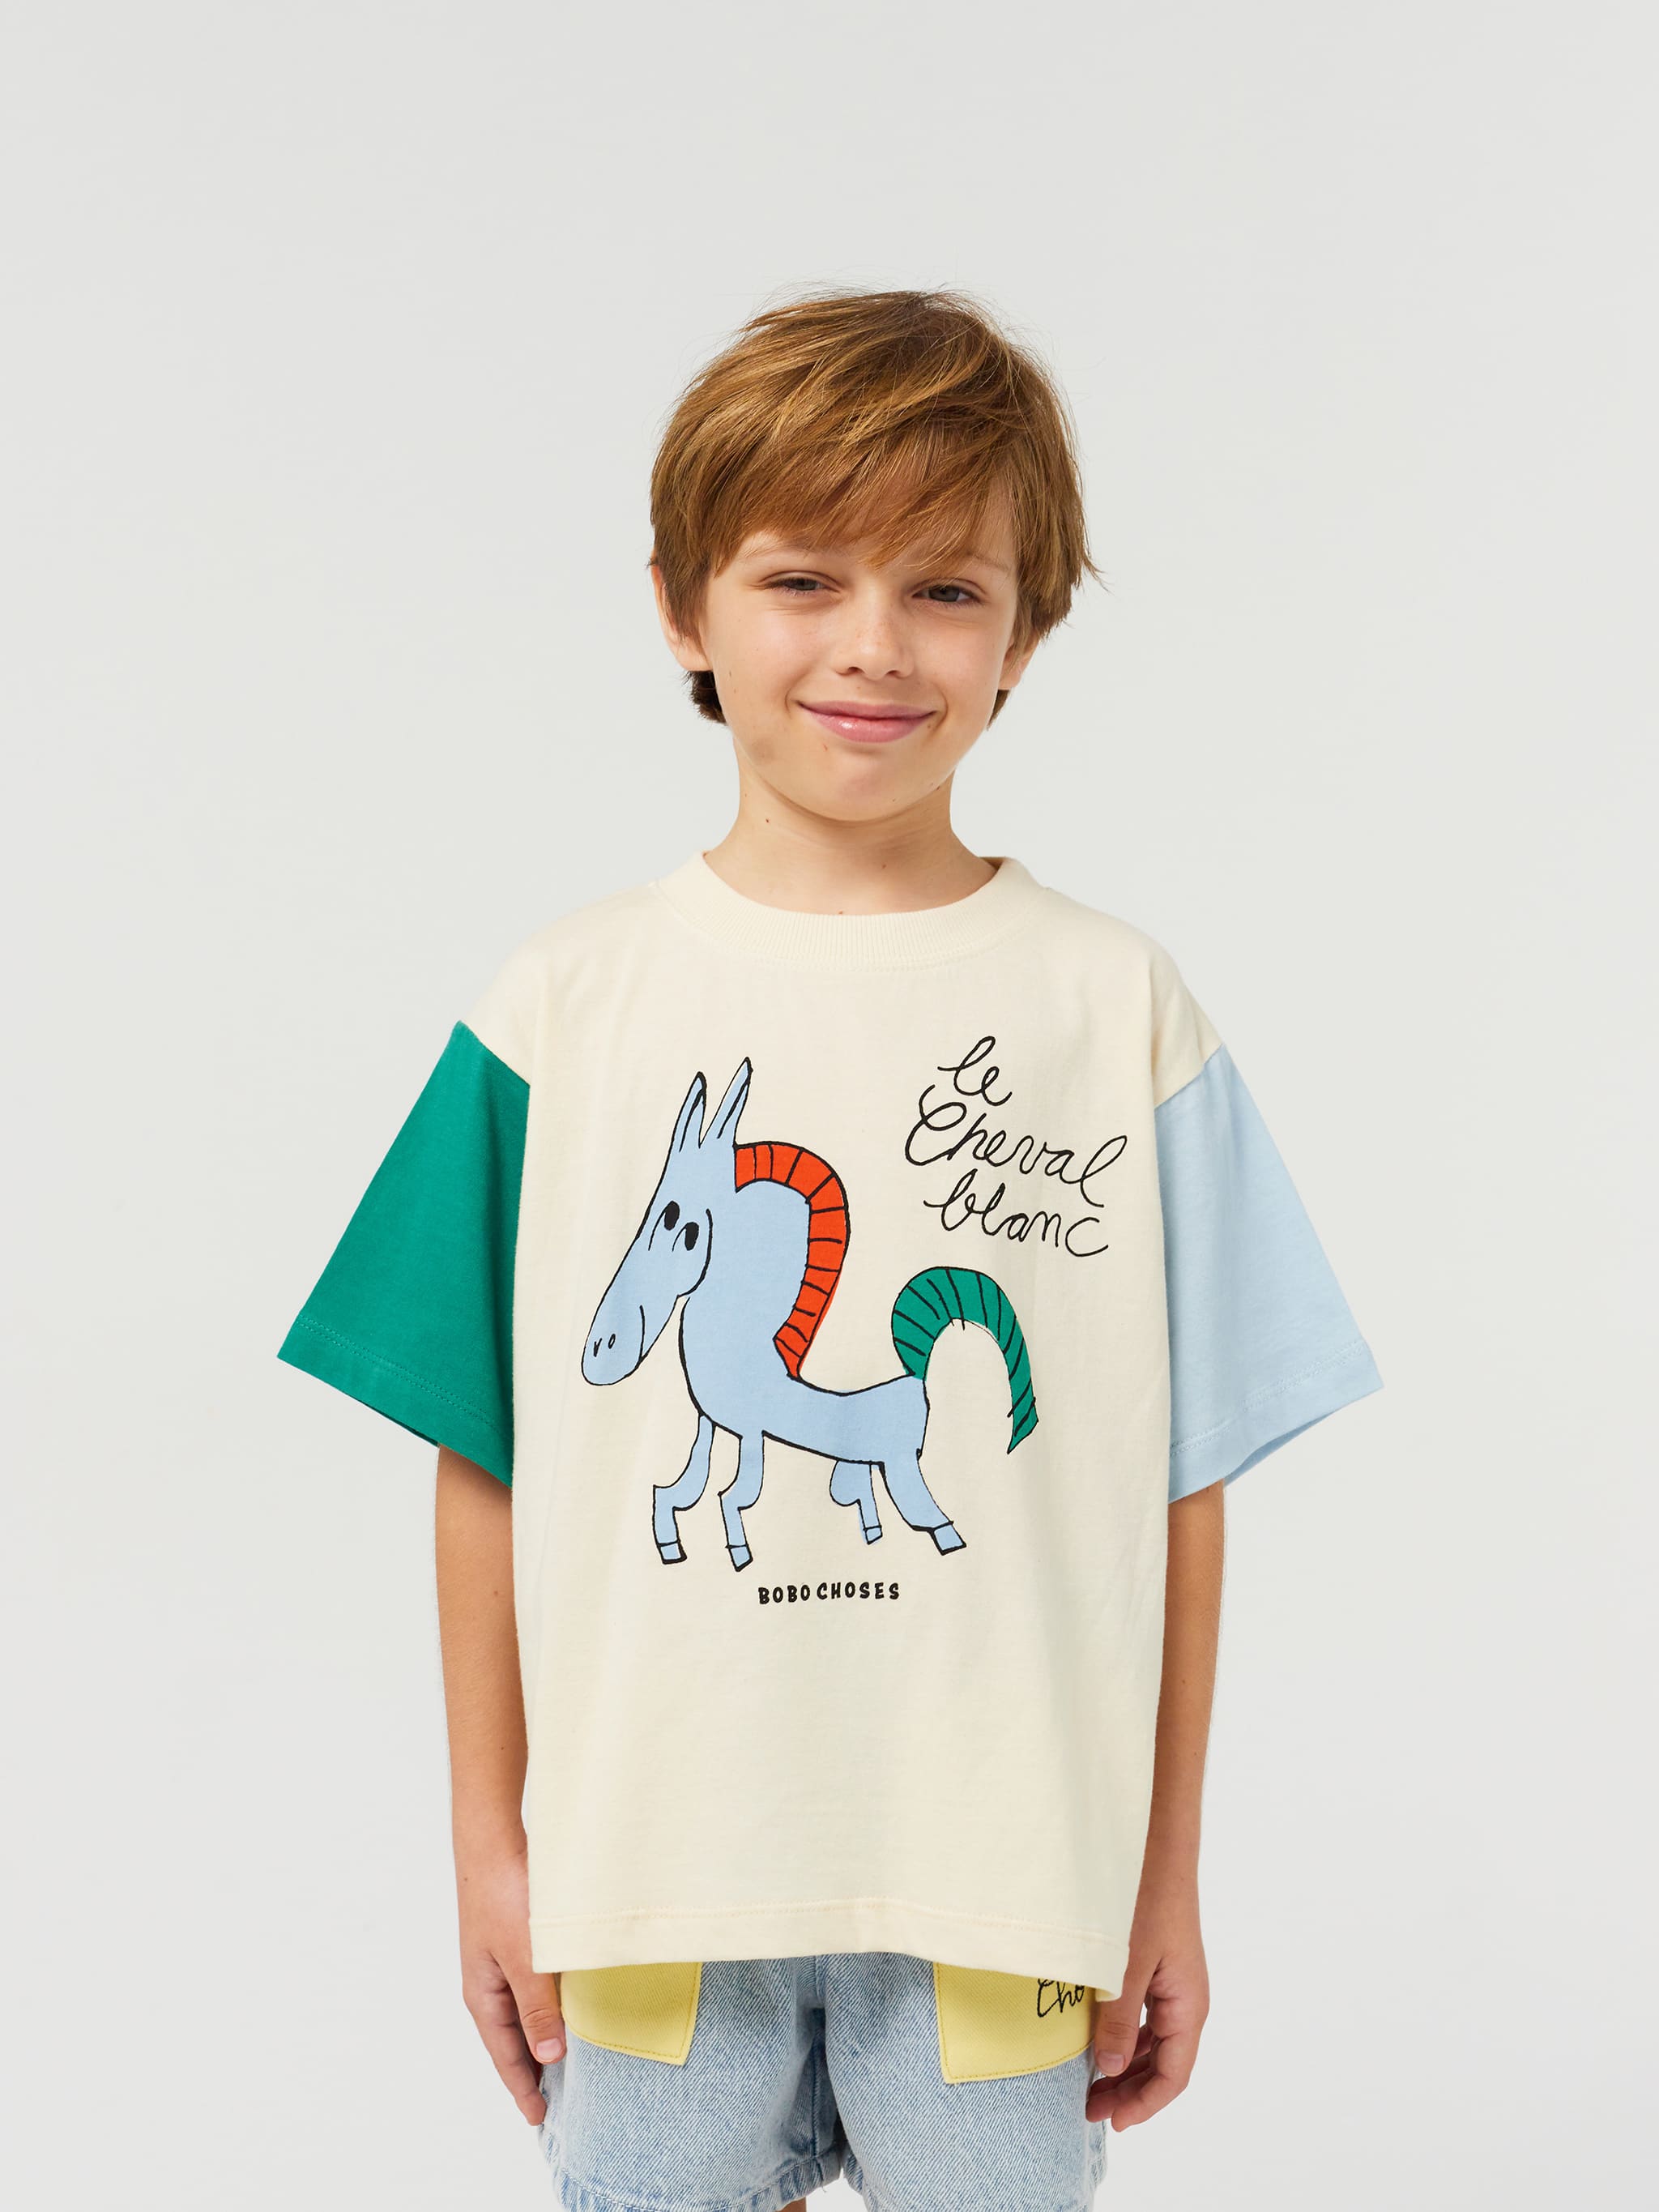 Children's T-shirts - Creative Prints | Bobo Choses